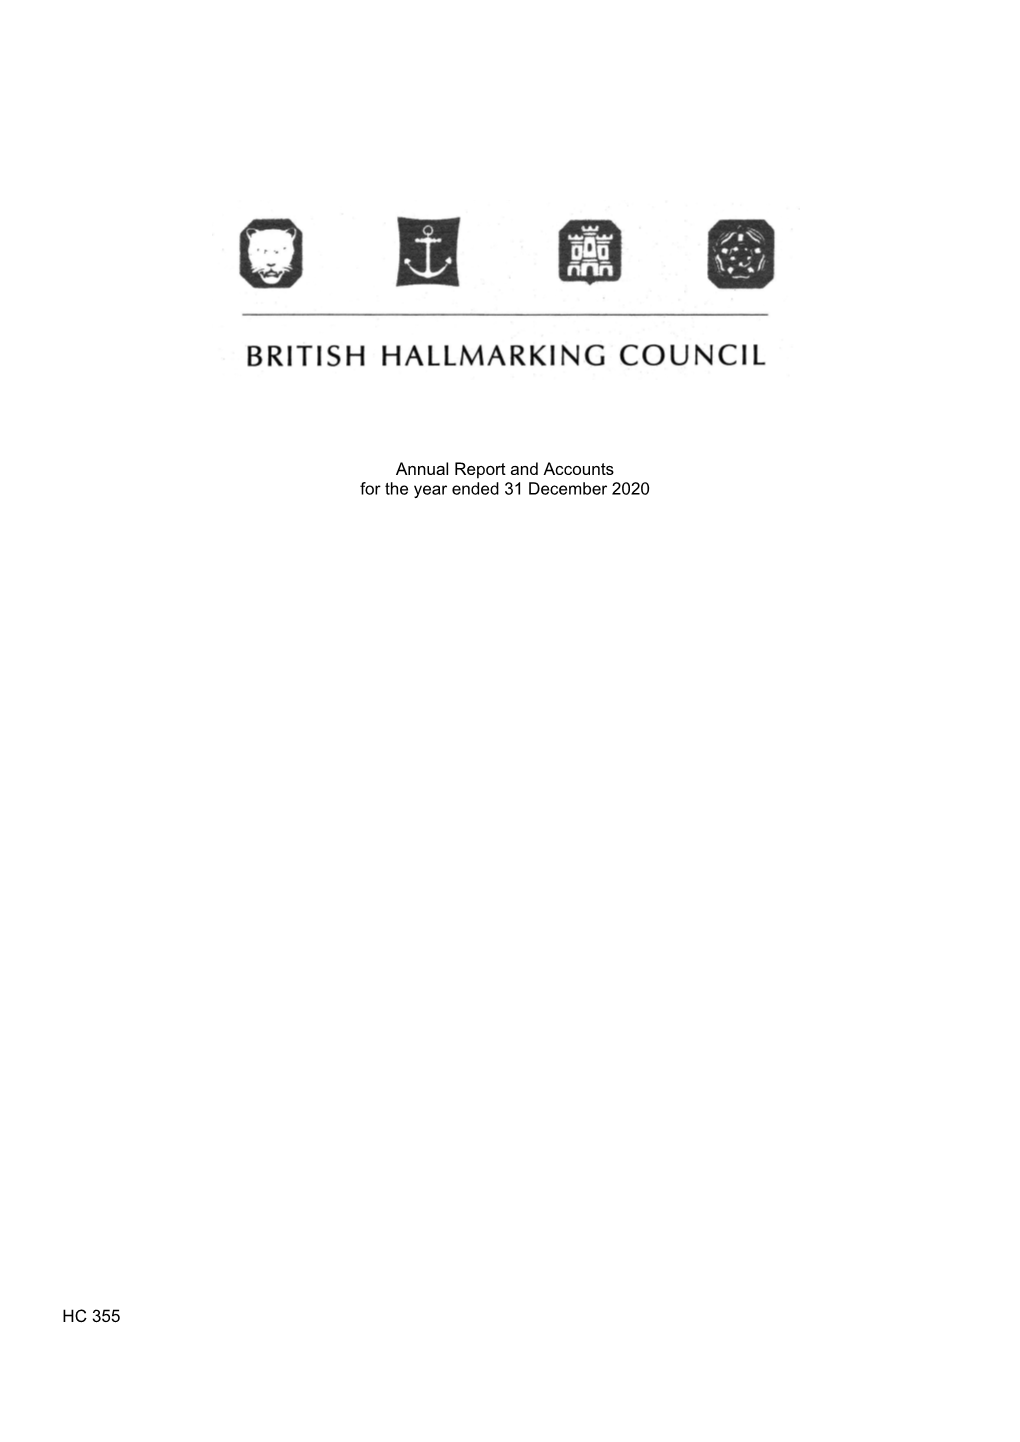 British Hallmarking Council at 60 Gracechurch Street London EC3V 0HR